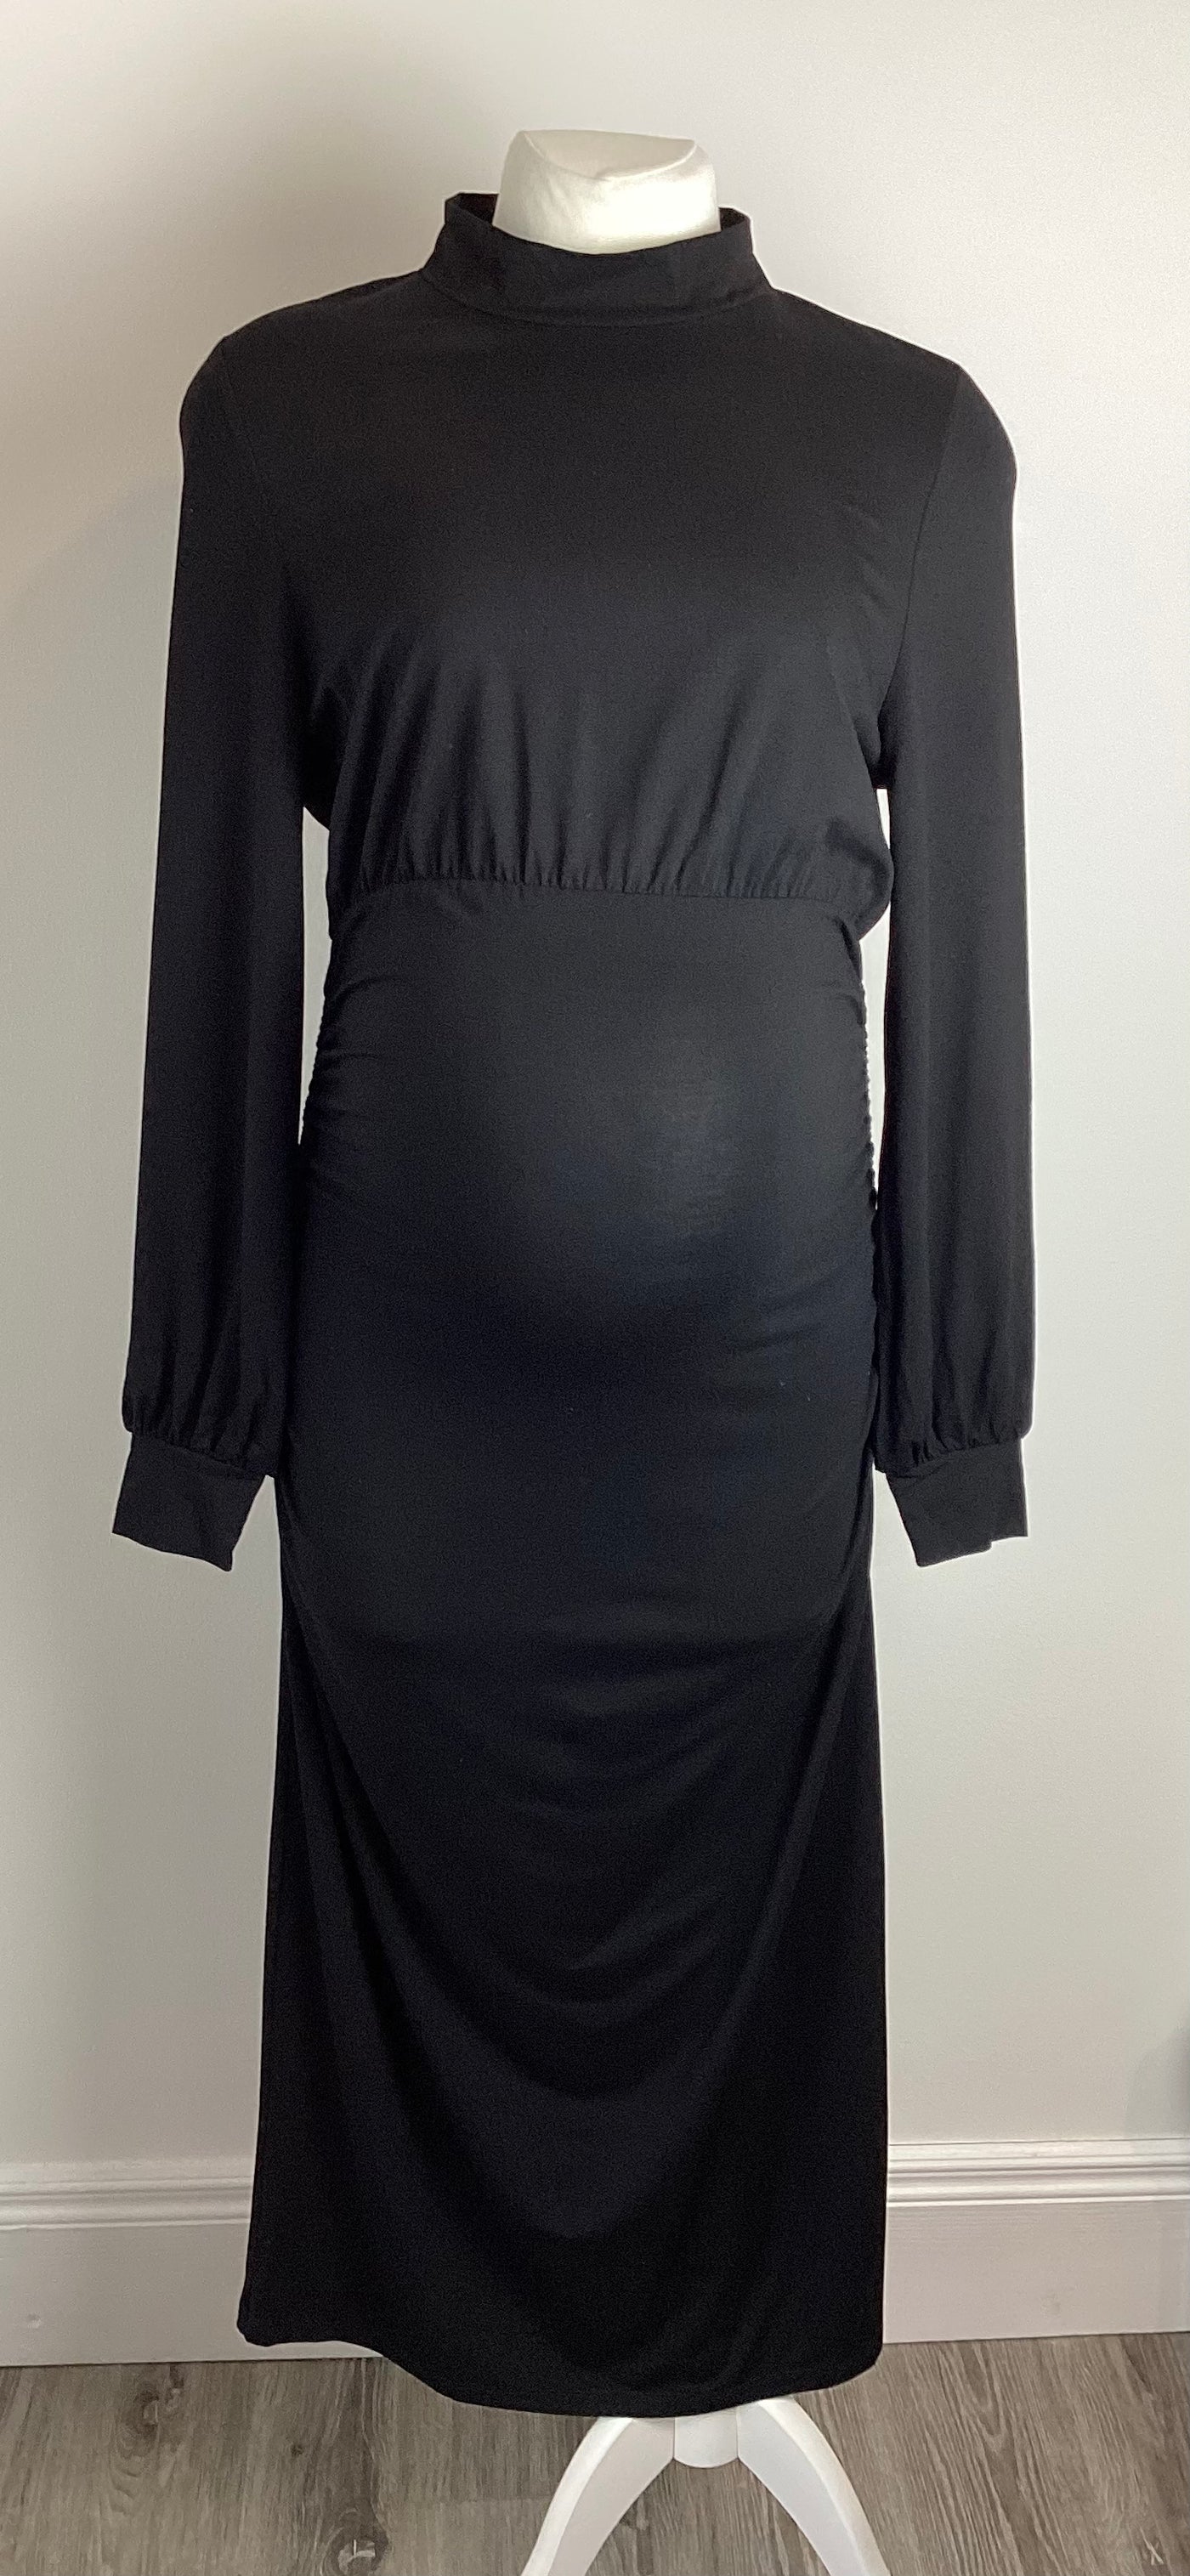 Isabella Oliver Black long sleeved polo neck dress - Size 2 (Approx UK 10/12)